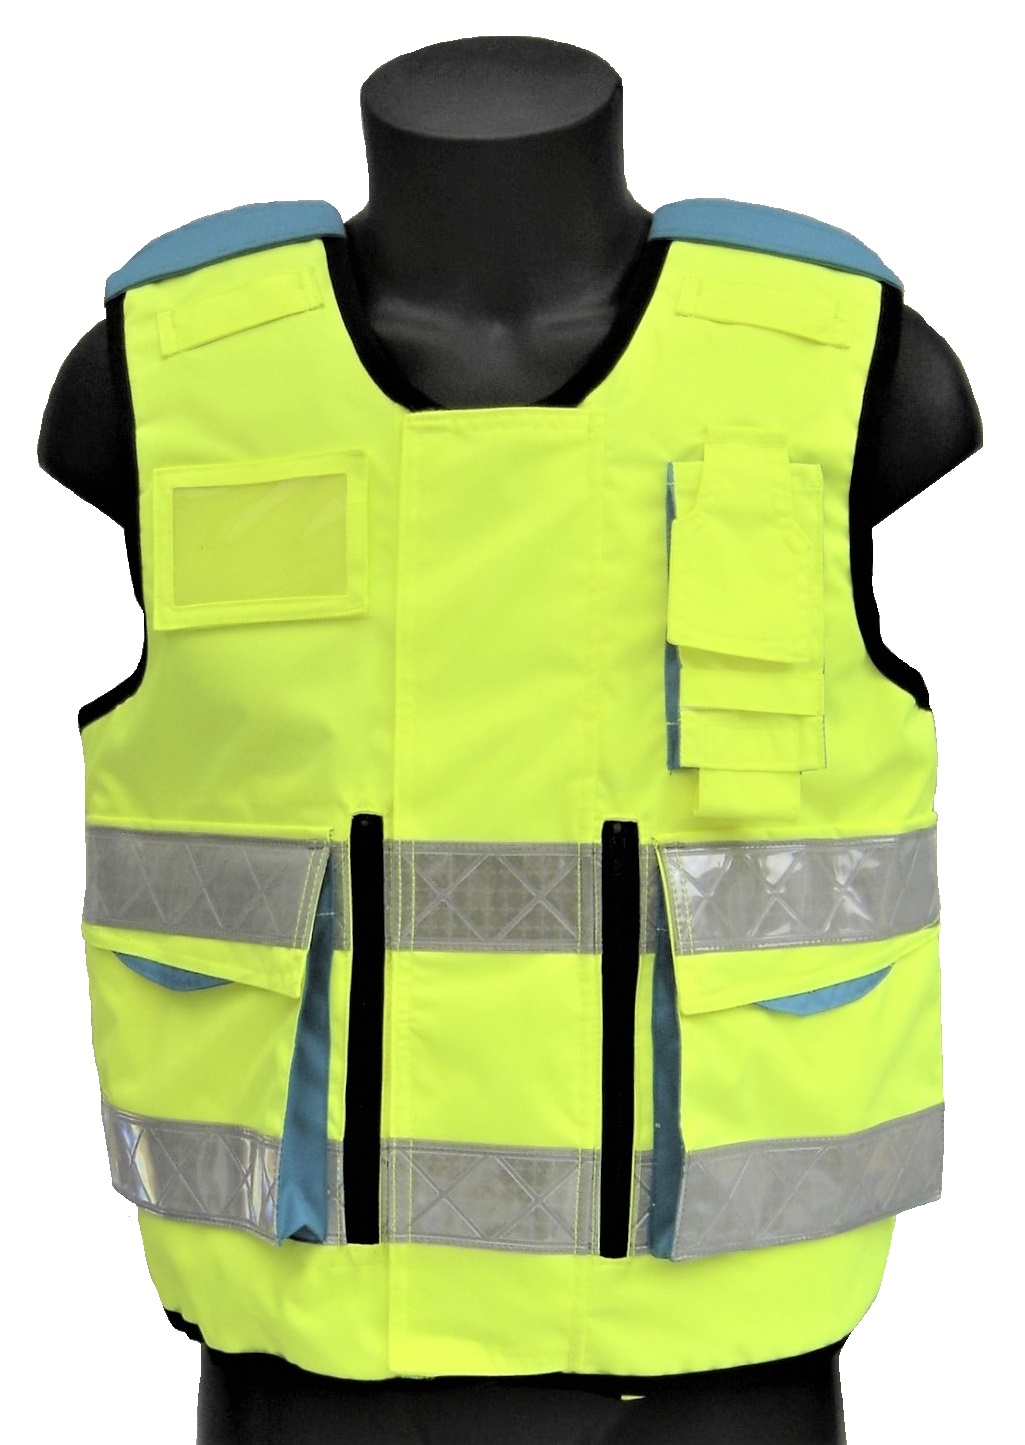 Stab resistant vest K1 ambulance yellow security economic